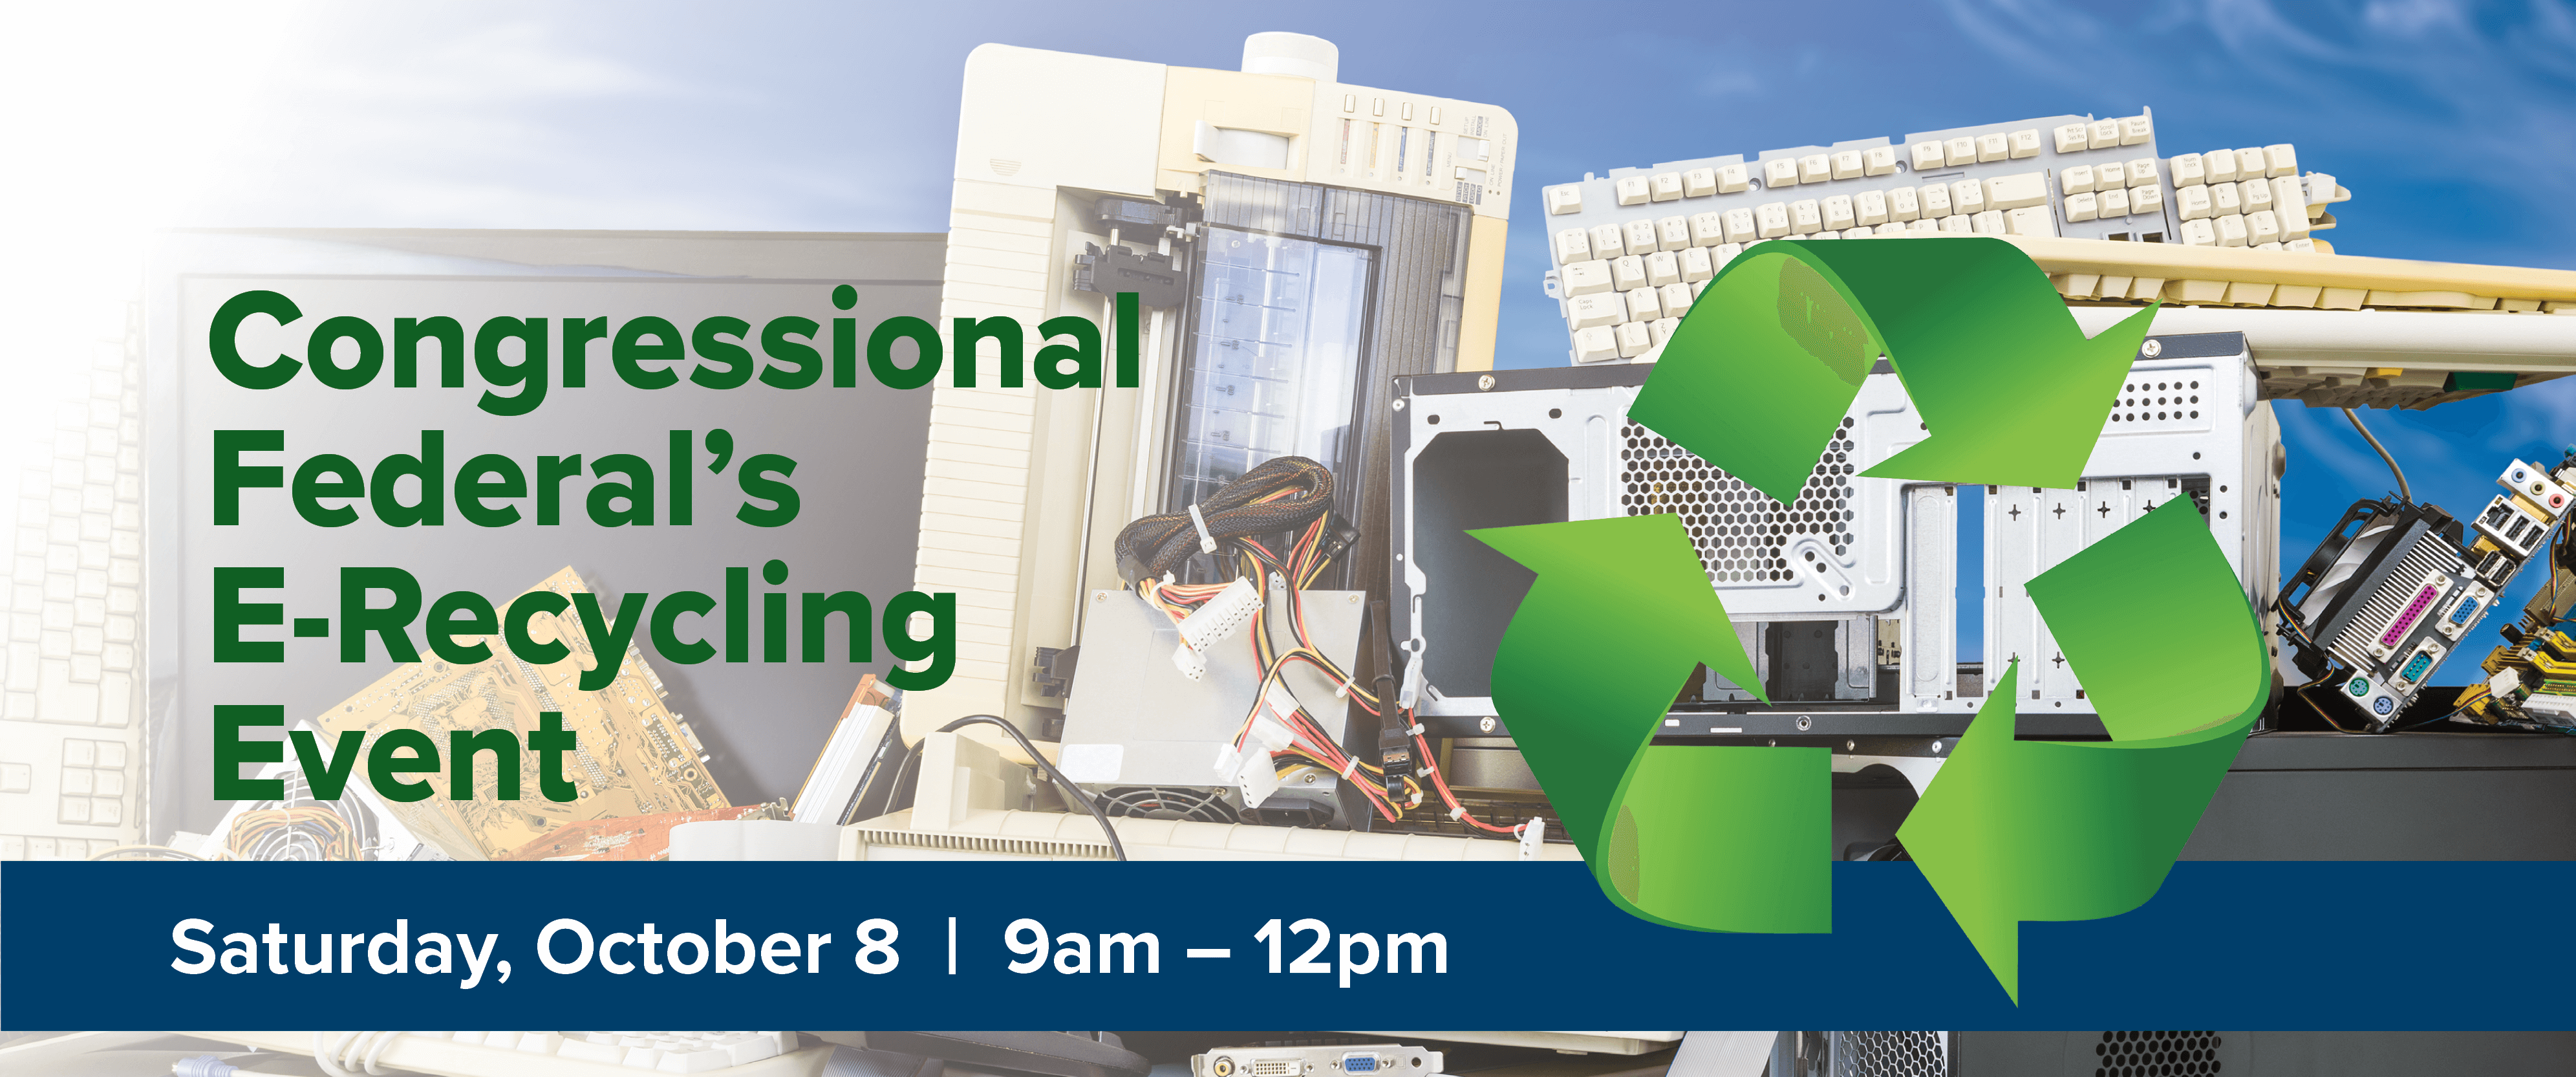 Congressional FederalÃ¢â‚¬â„¢s E-Recycling Event. Saturday, October 8, 9am Ã¢â‚¬â€œ 12pm 